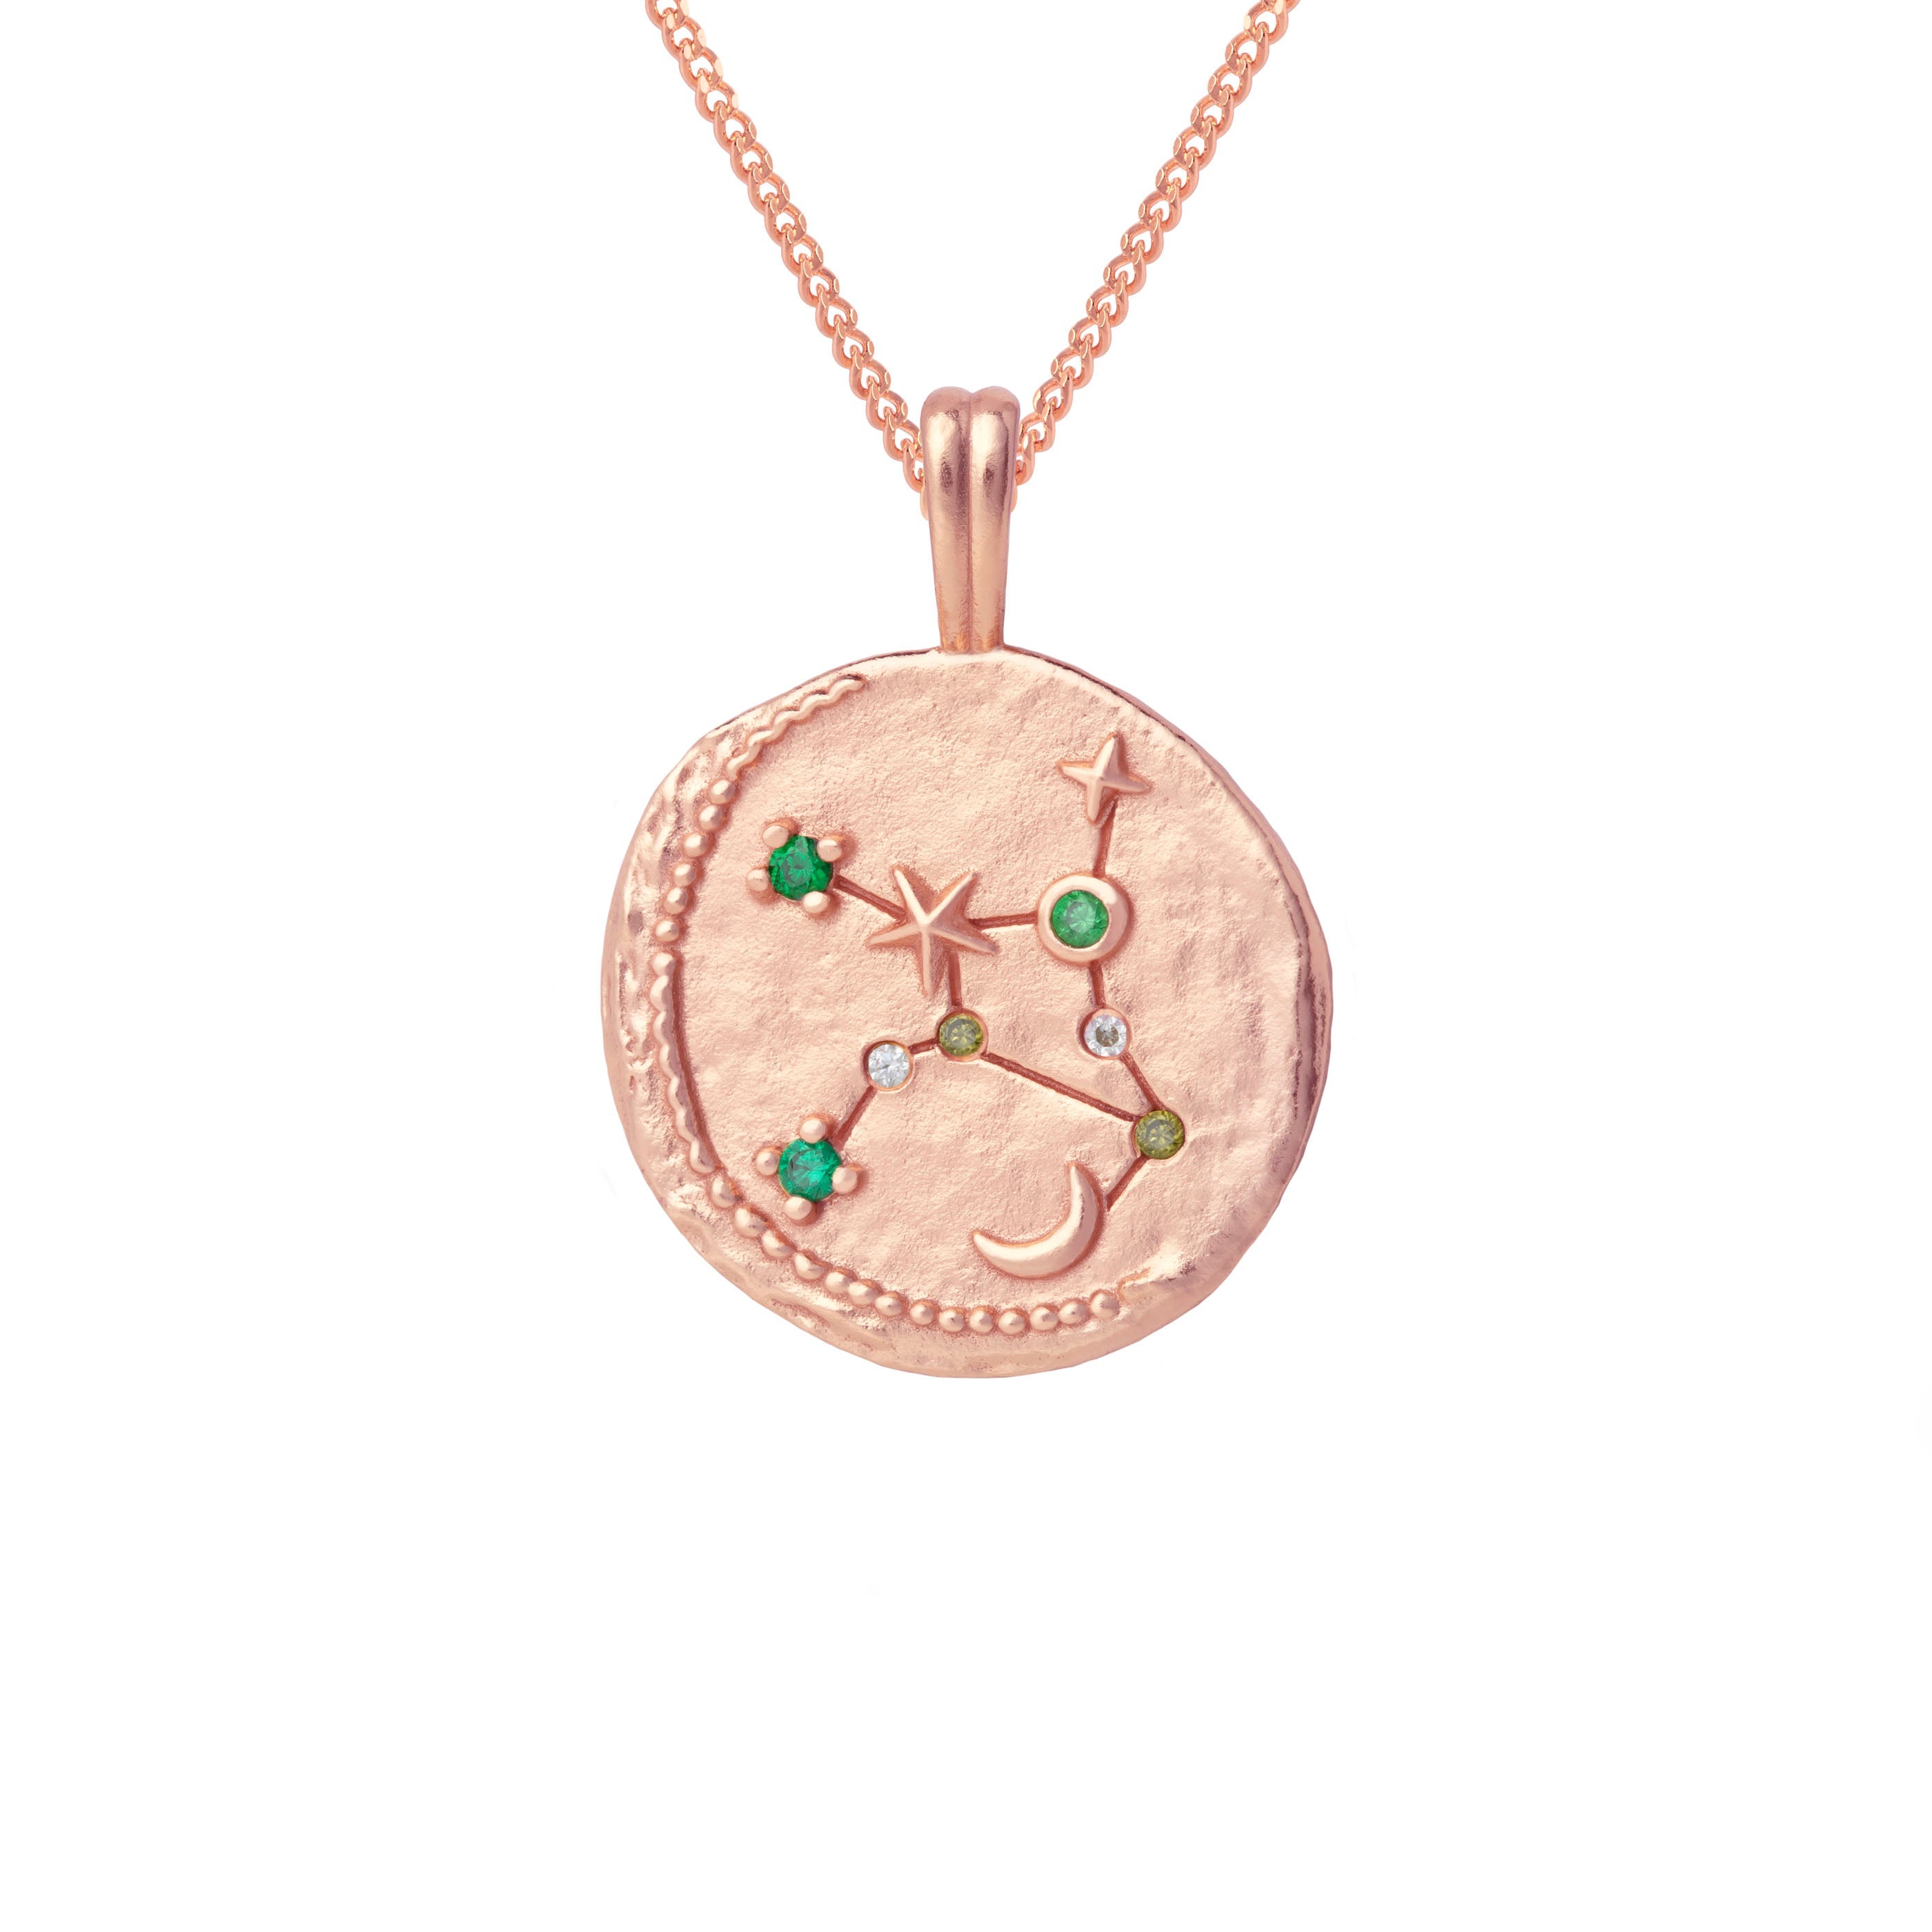 Virgo Zodiac Pendant Necklace in Rose Gold